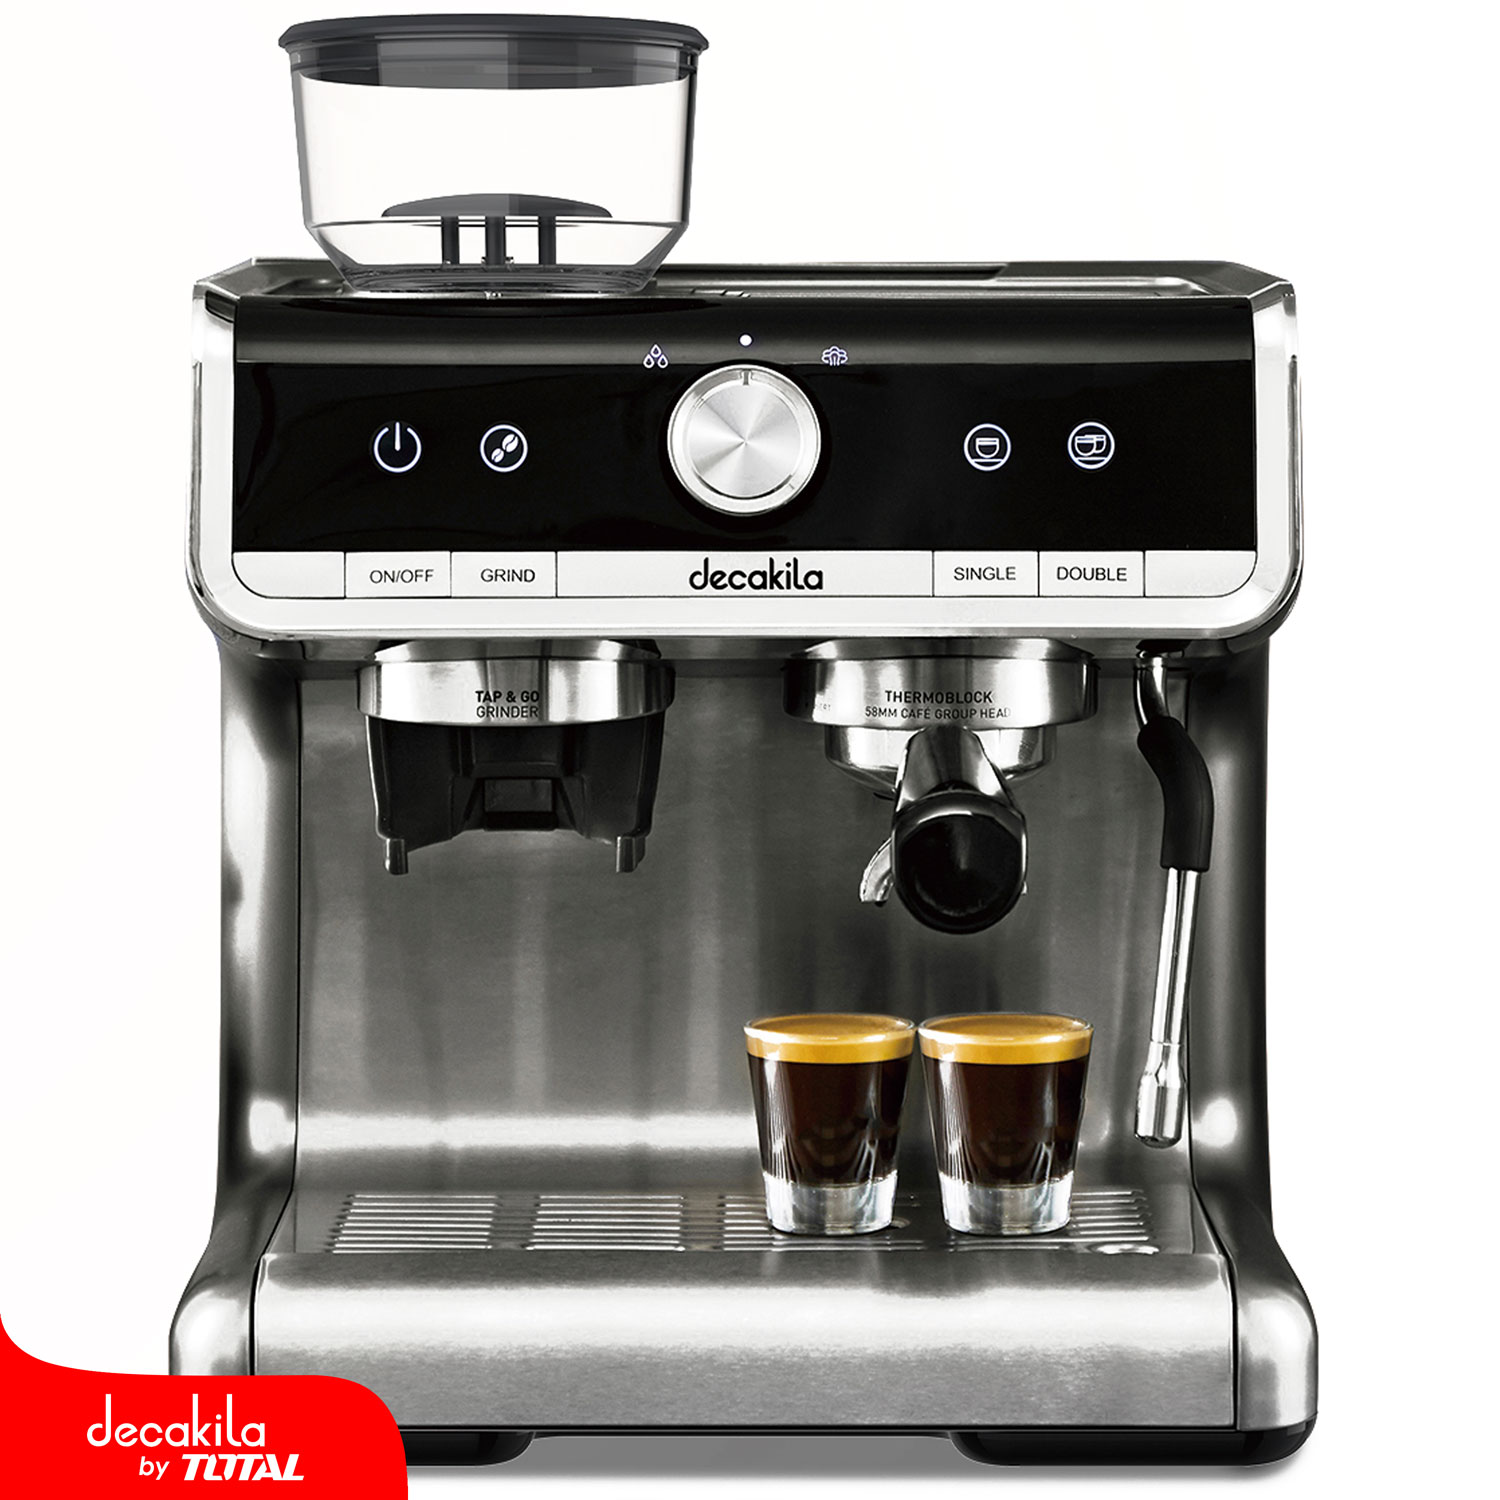 La máquina de café espresso